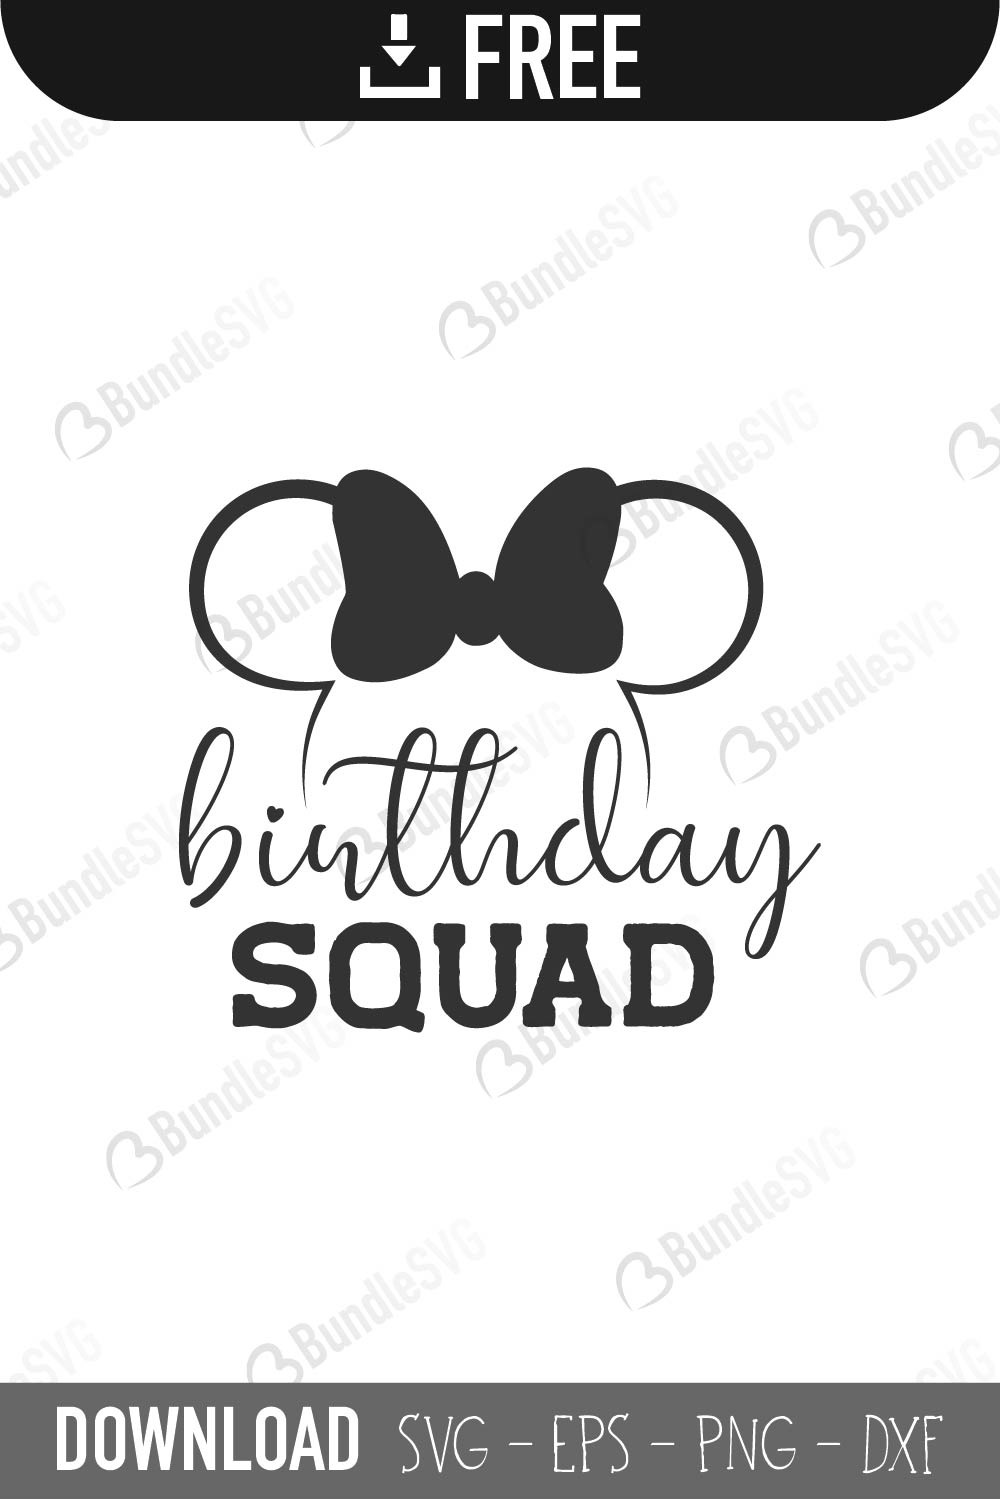 Birthday Squad Svg Cut Files Free Download Bundlesvg